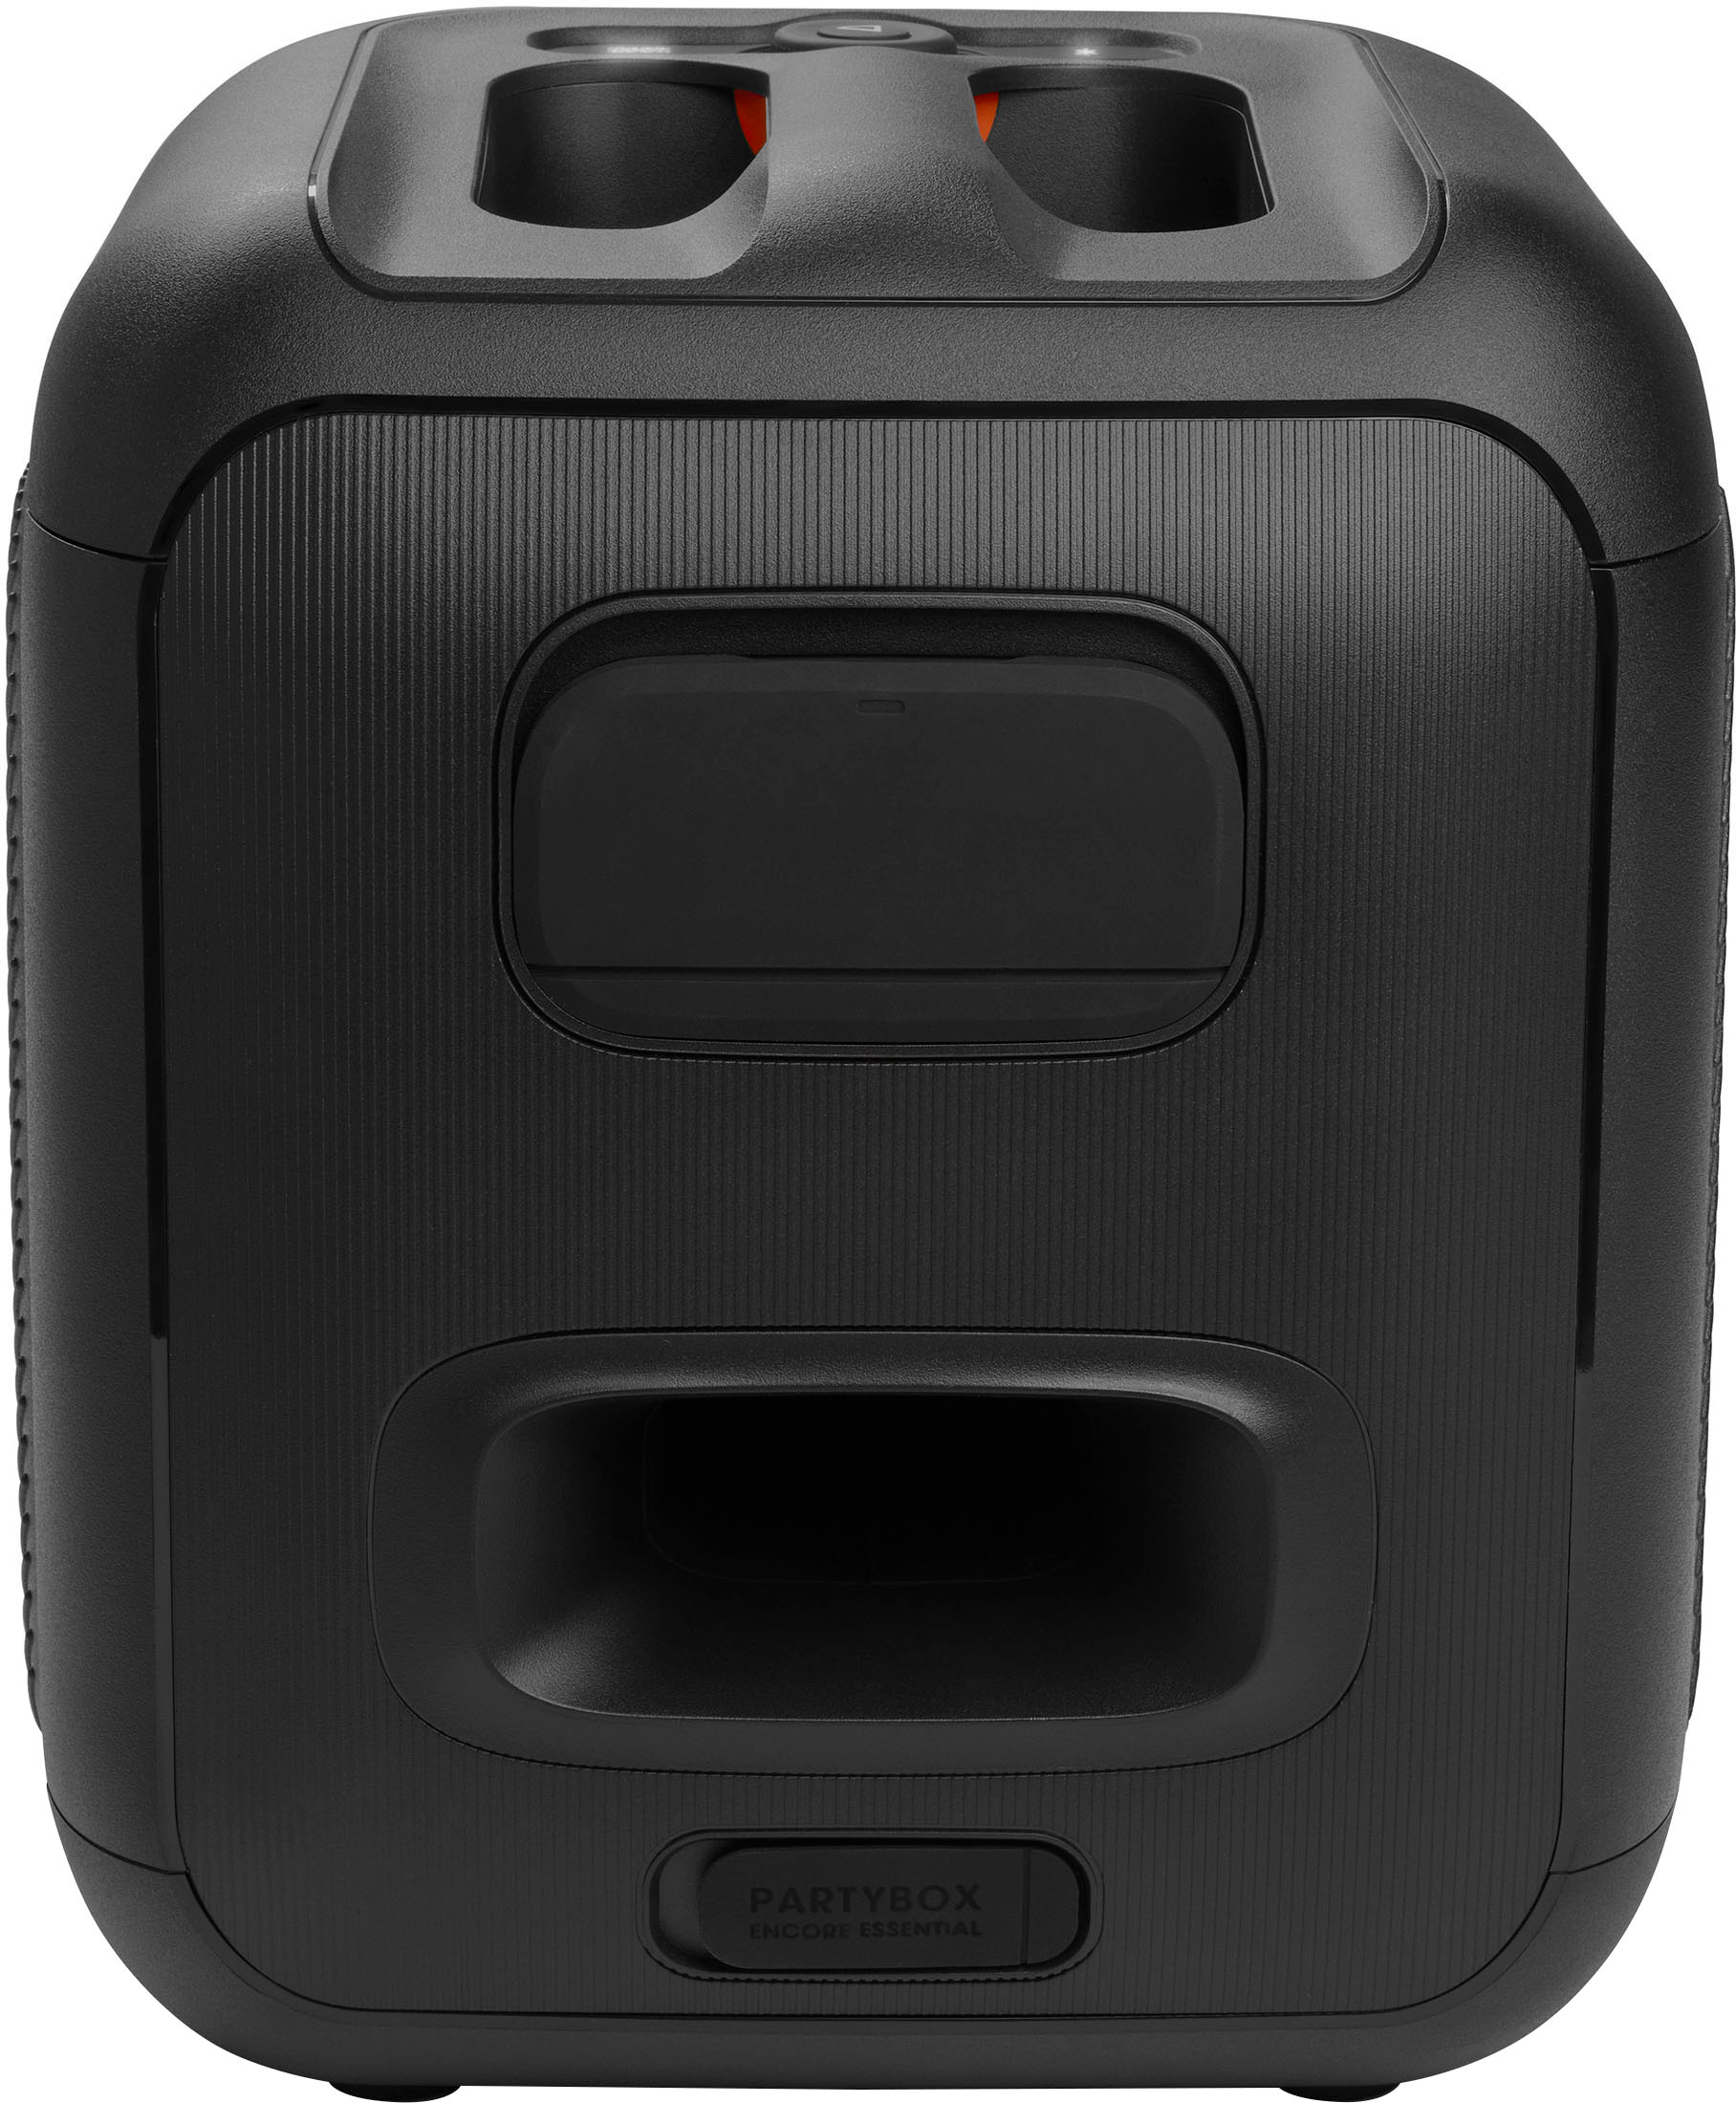 JBL Partybox Encore Essential Review: 100W Power Portable Speaker